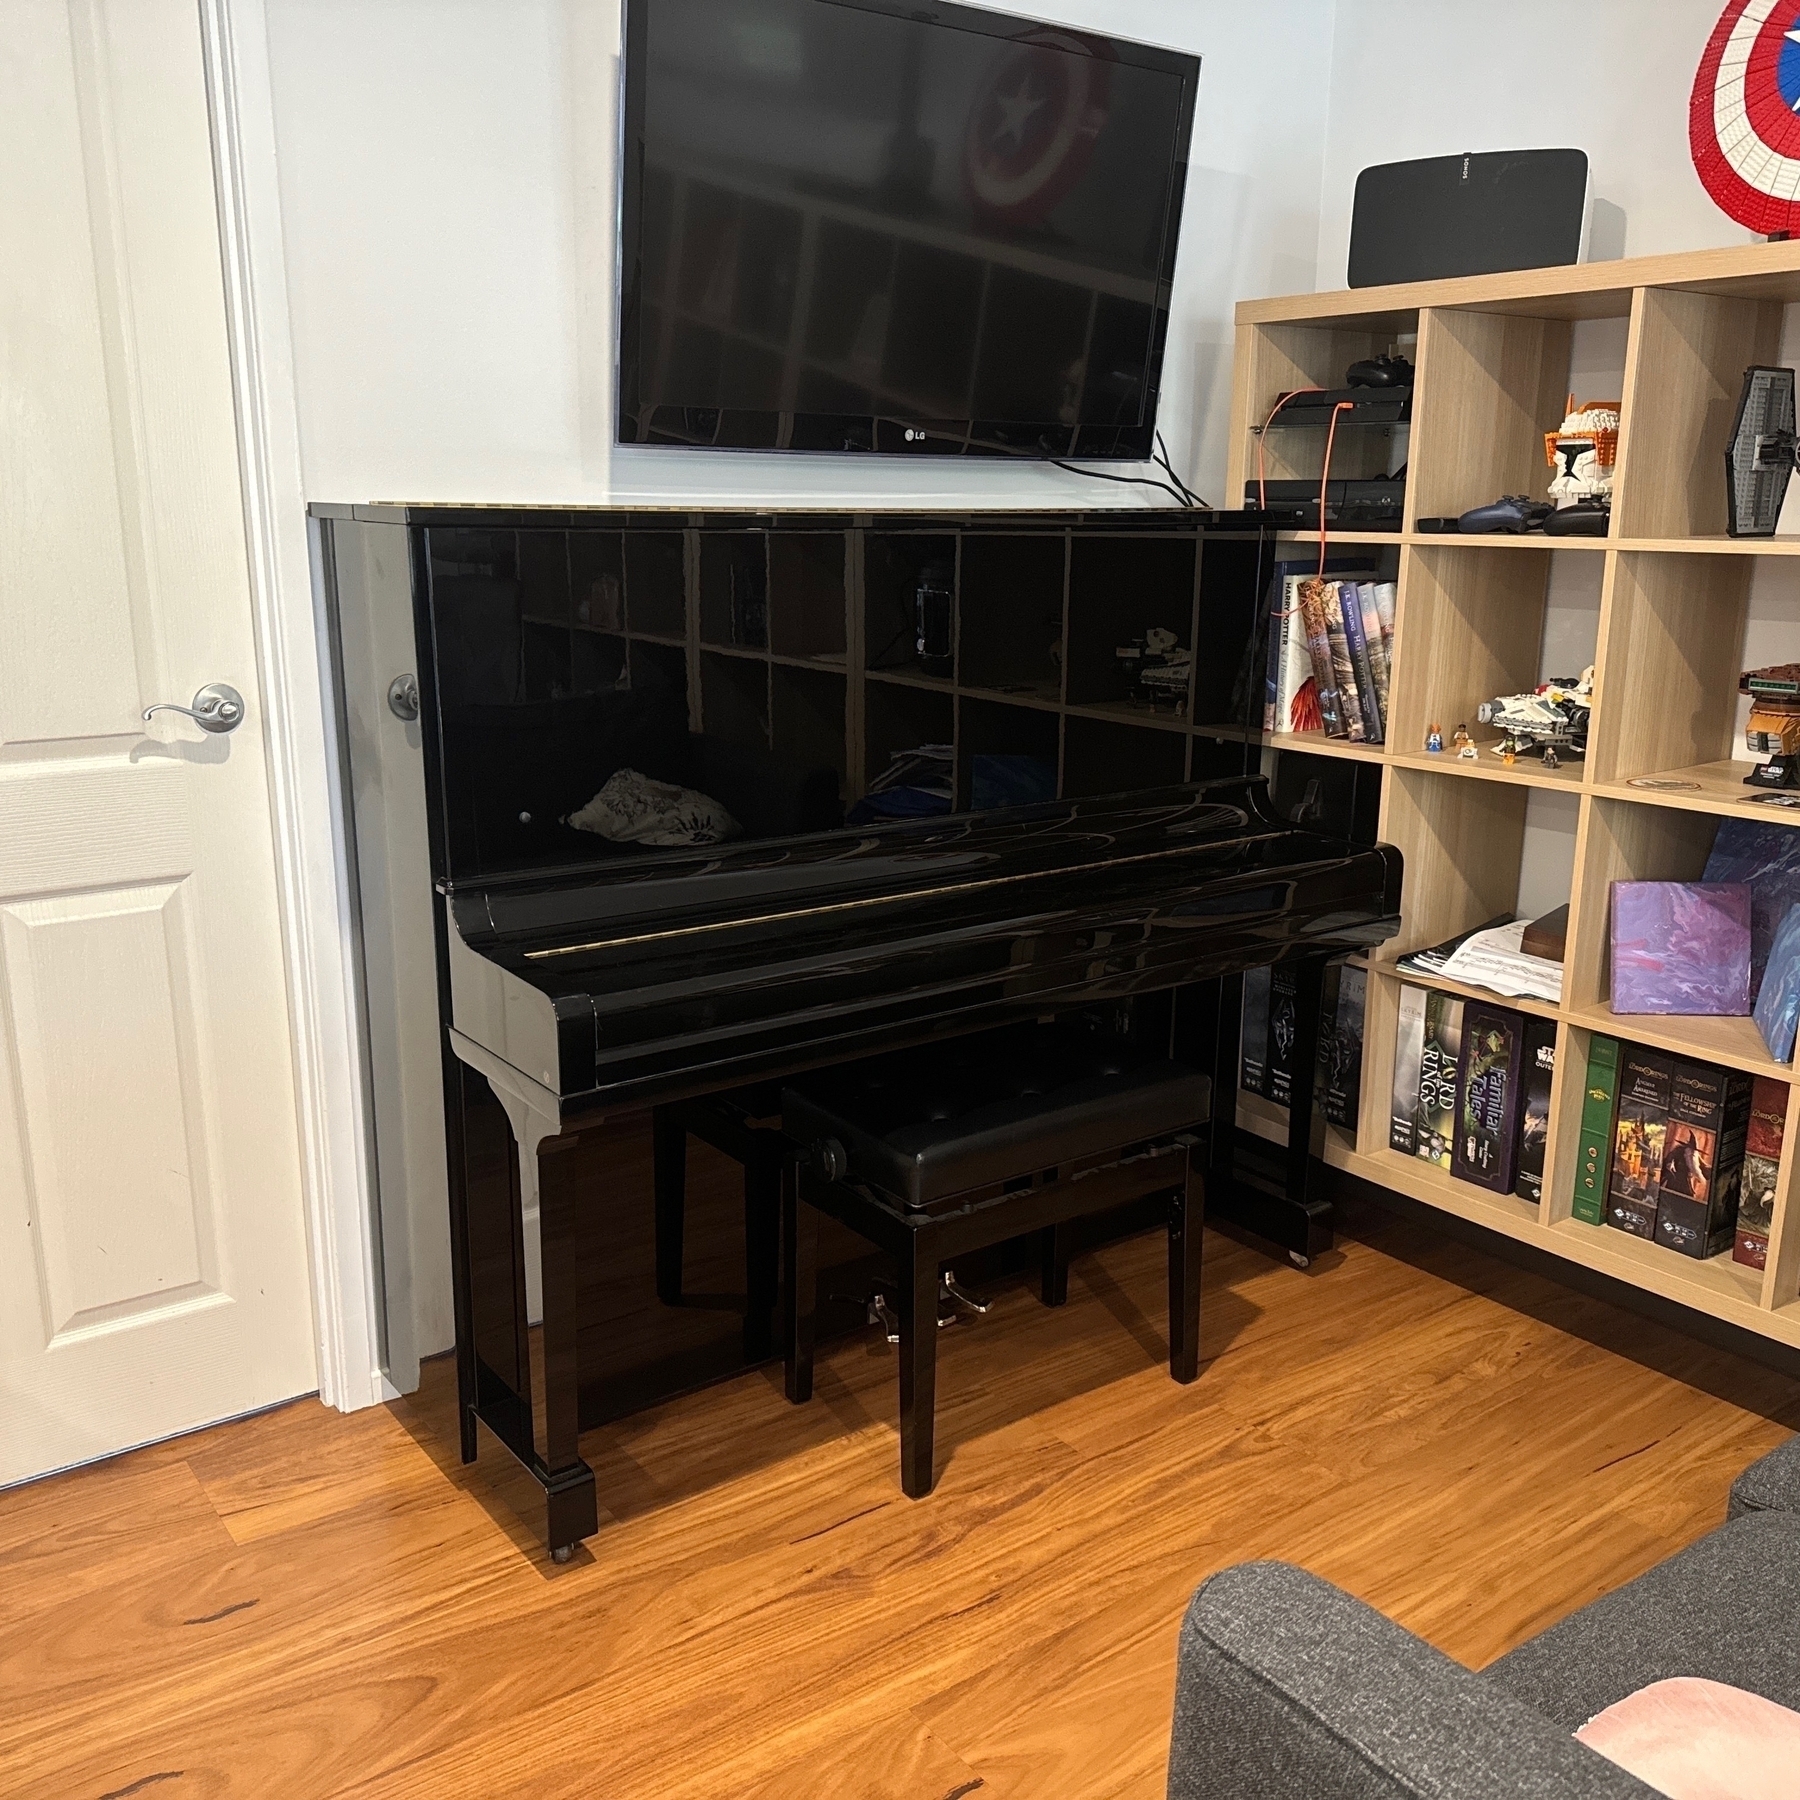 A black Yamaha piano under a wall mounted tv next to an ikea bookshelf.